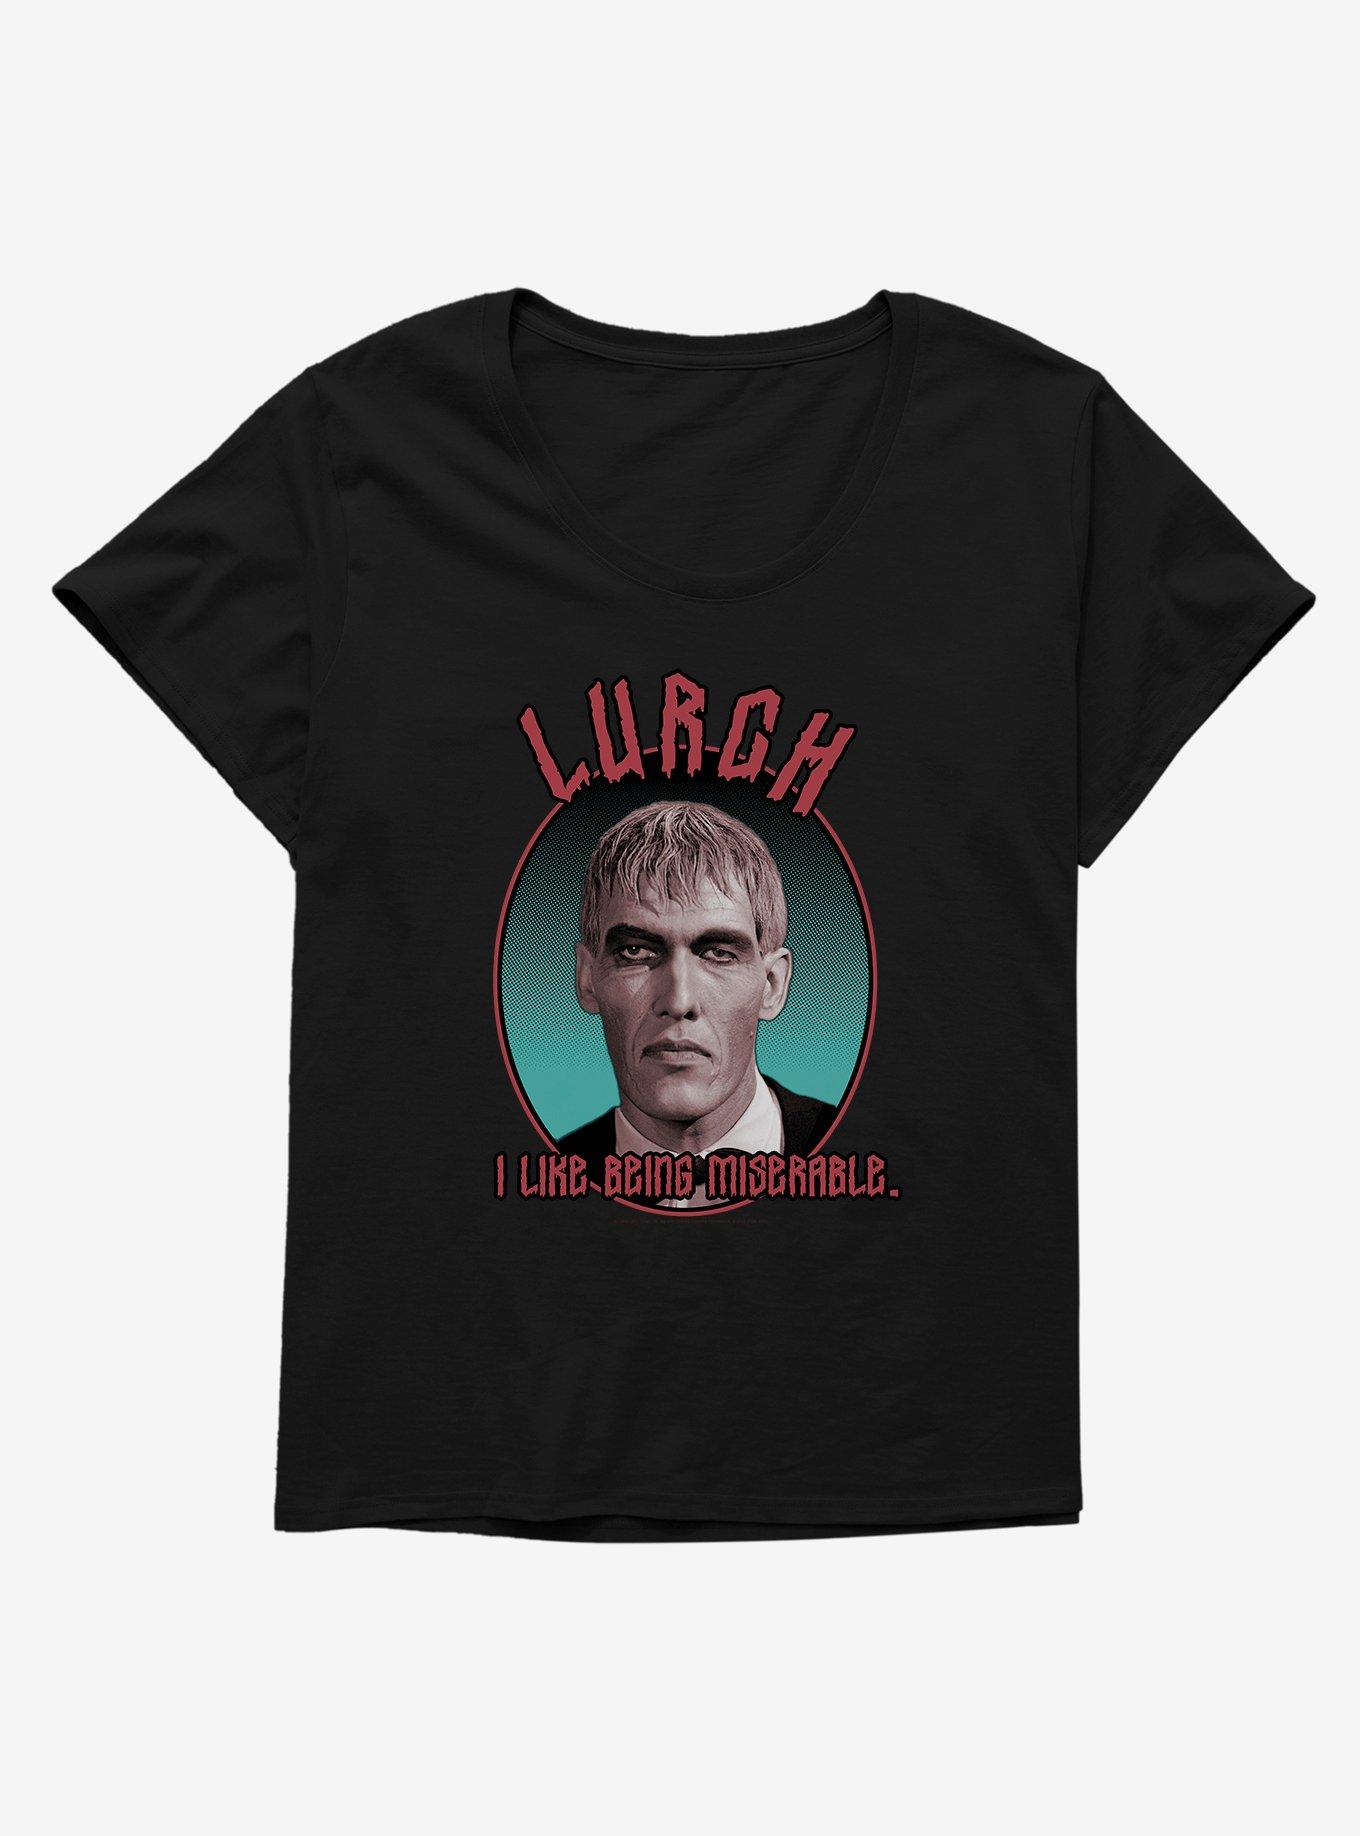 The Addams Family Lurch Girls T-Shirt Plus